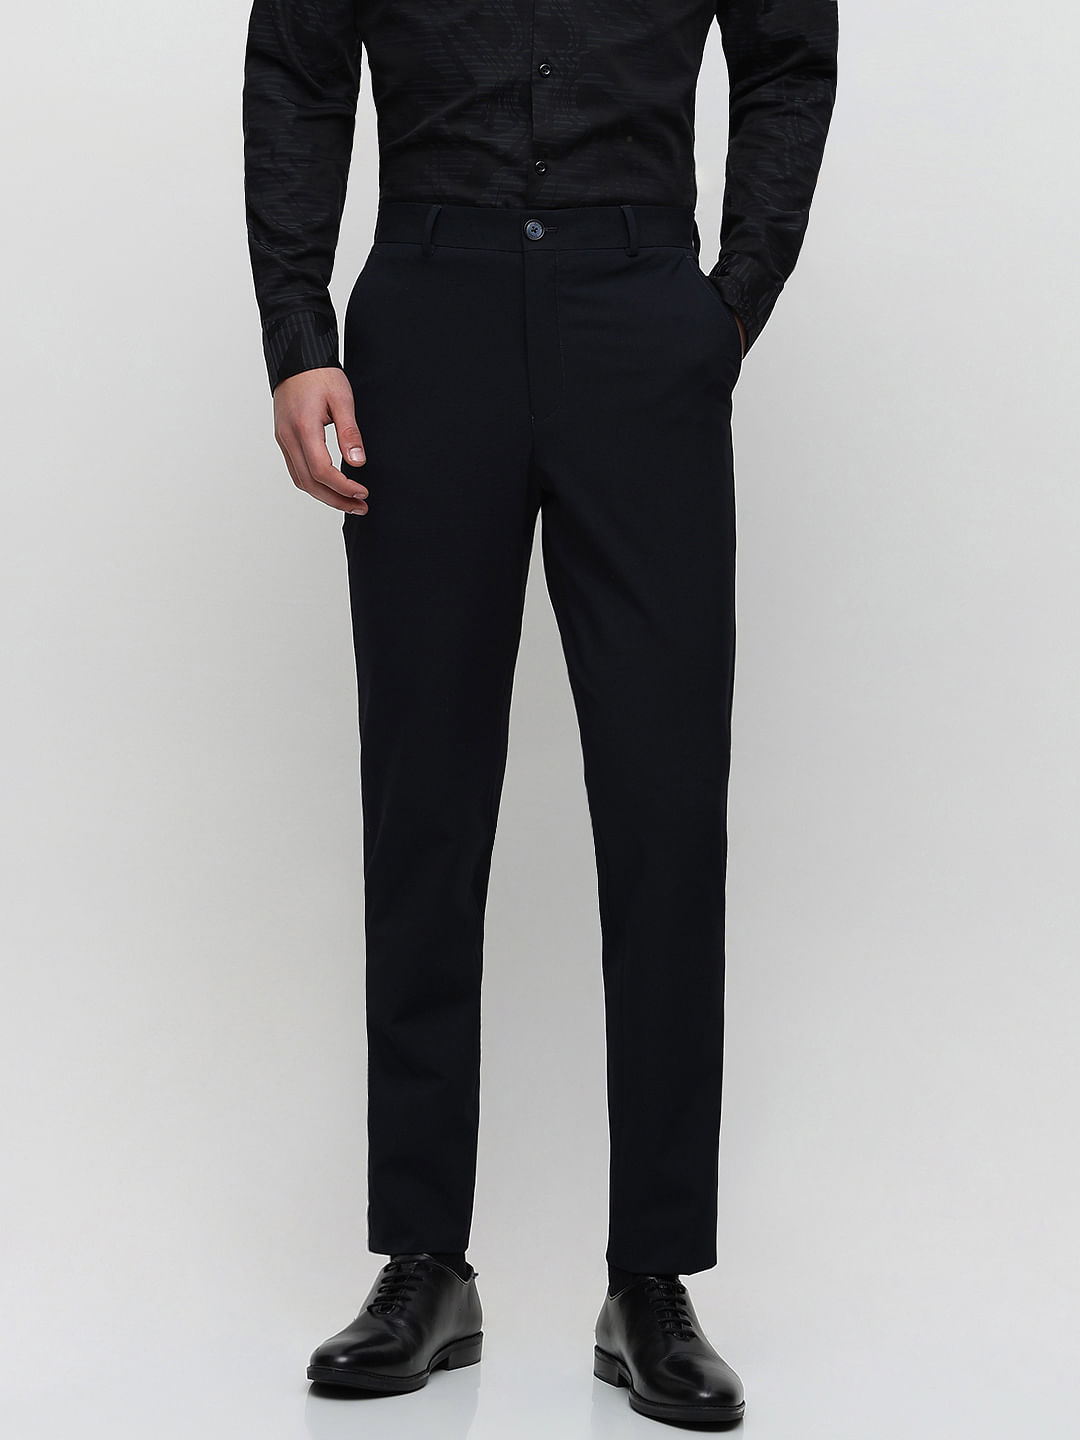 Buy Men's Tailored Trousers Online | Reiss UK